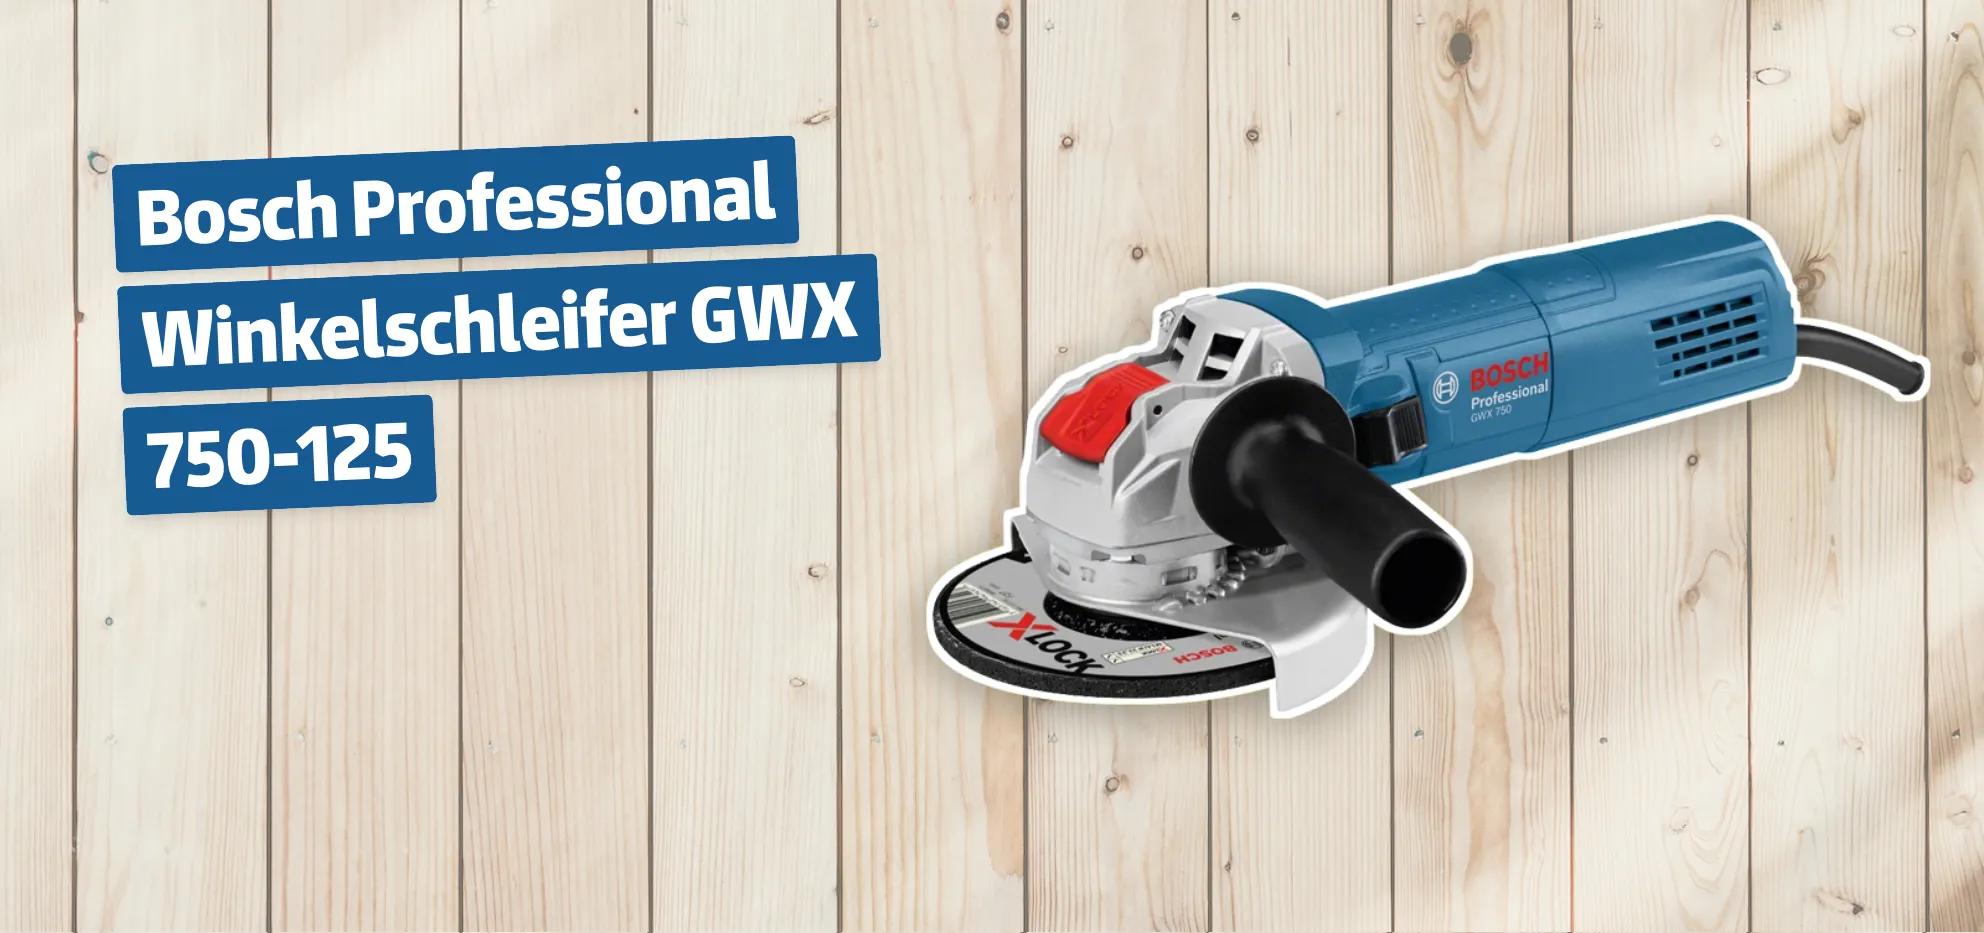 Bosch Professional Winkelschleifer GWX 750-125